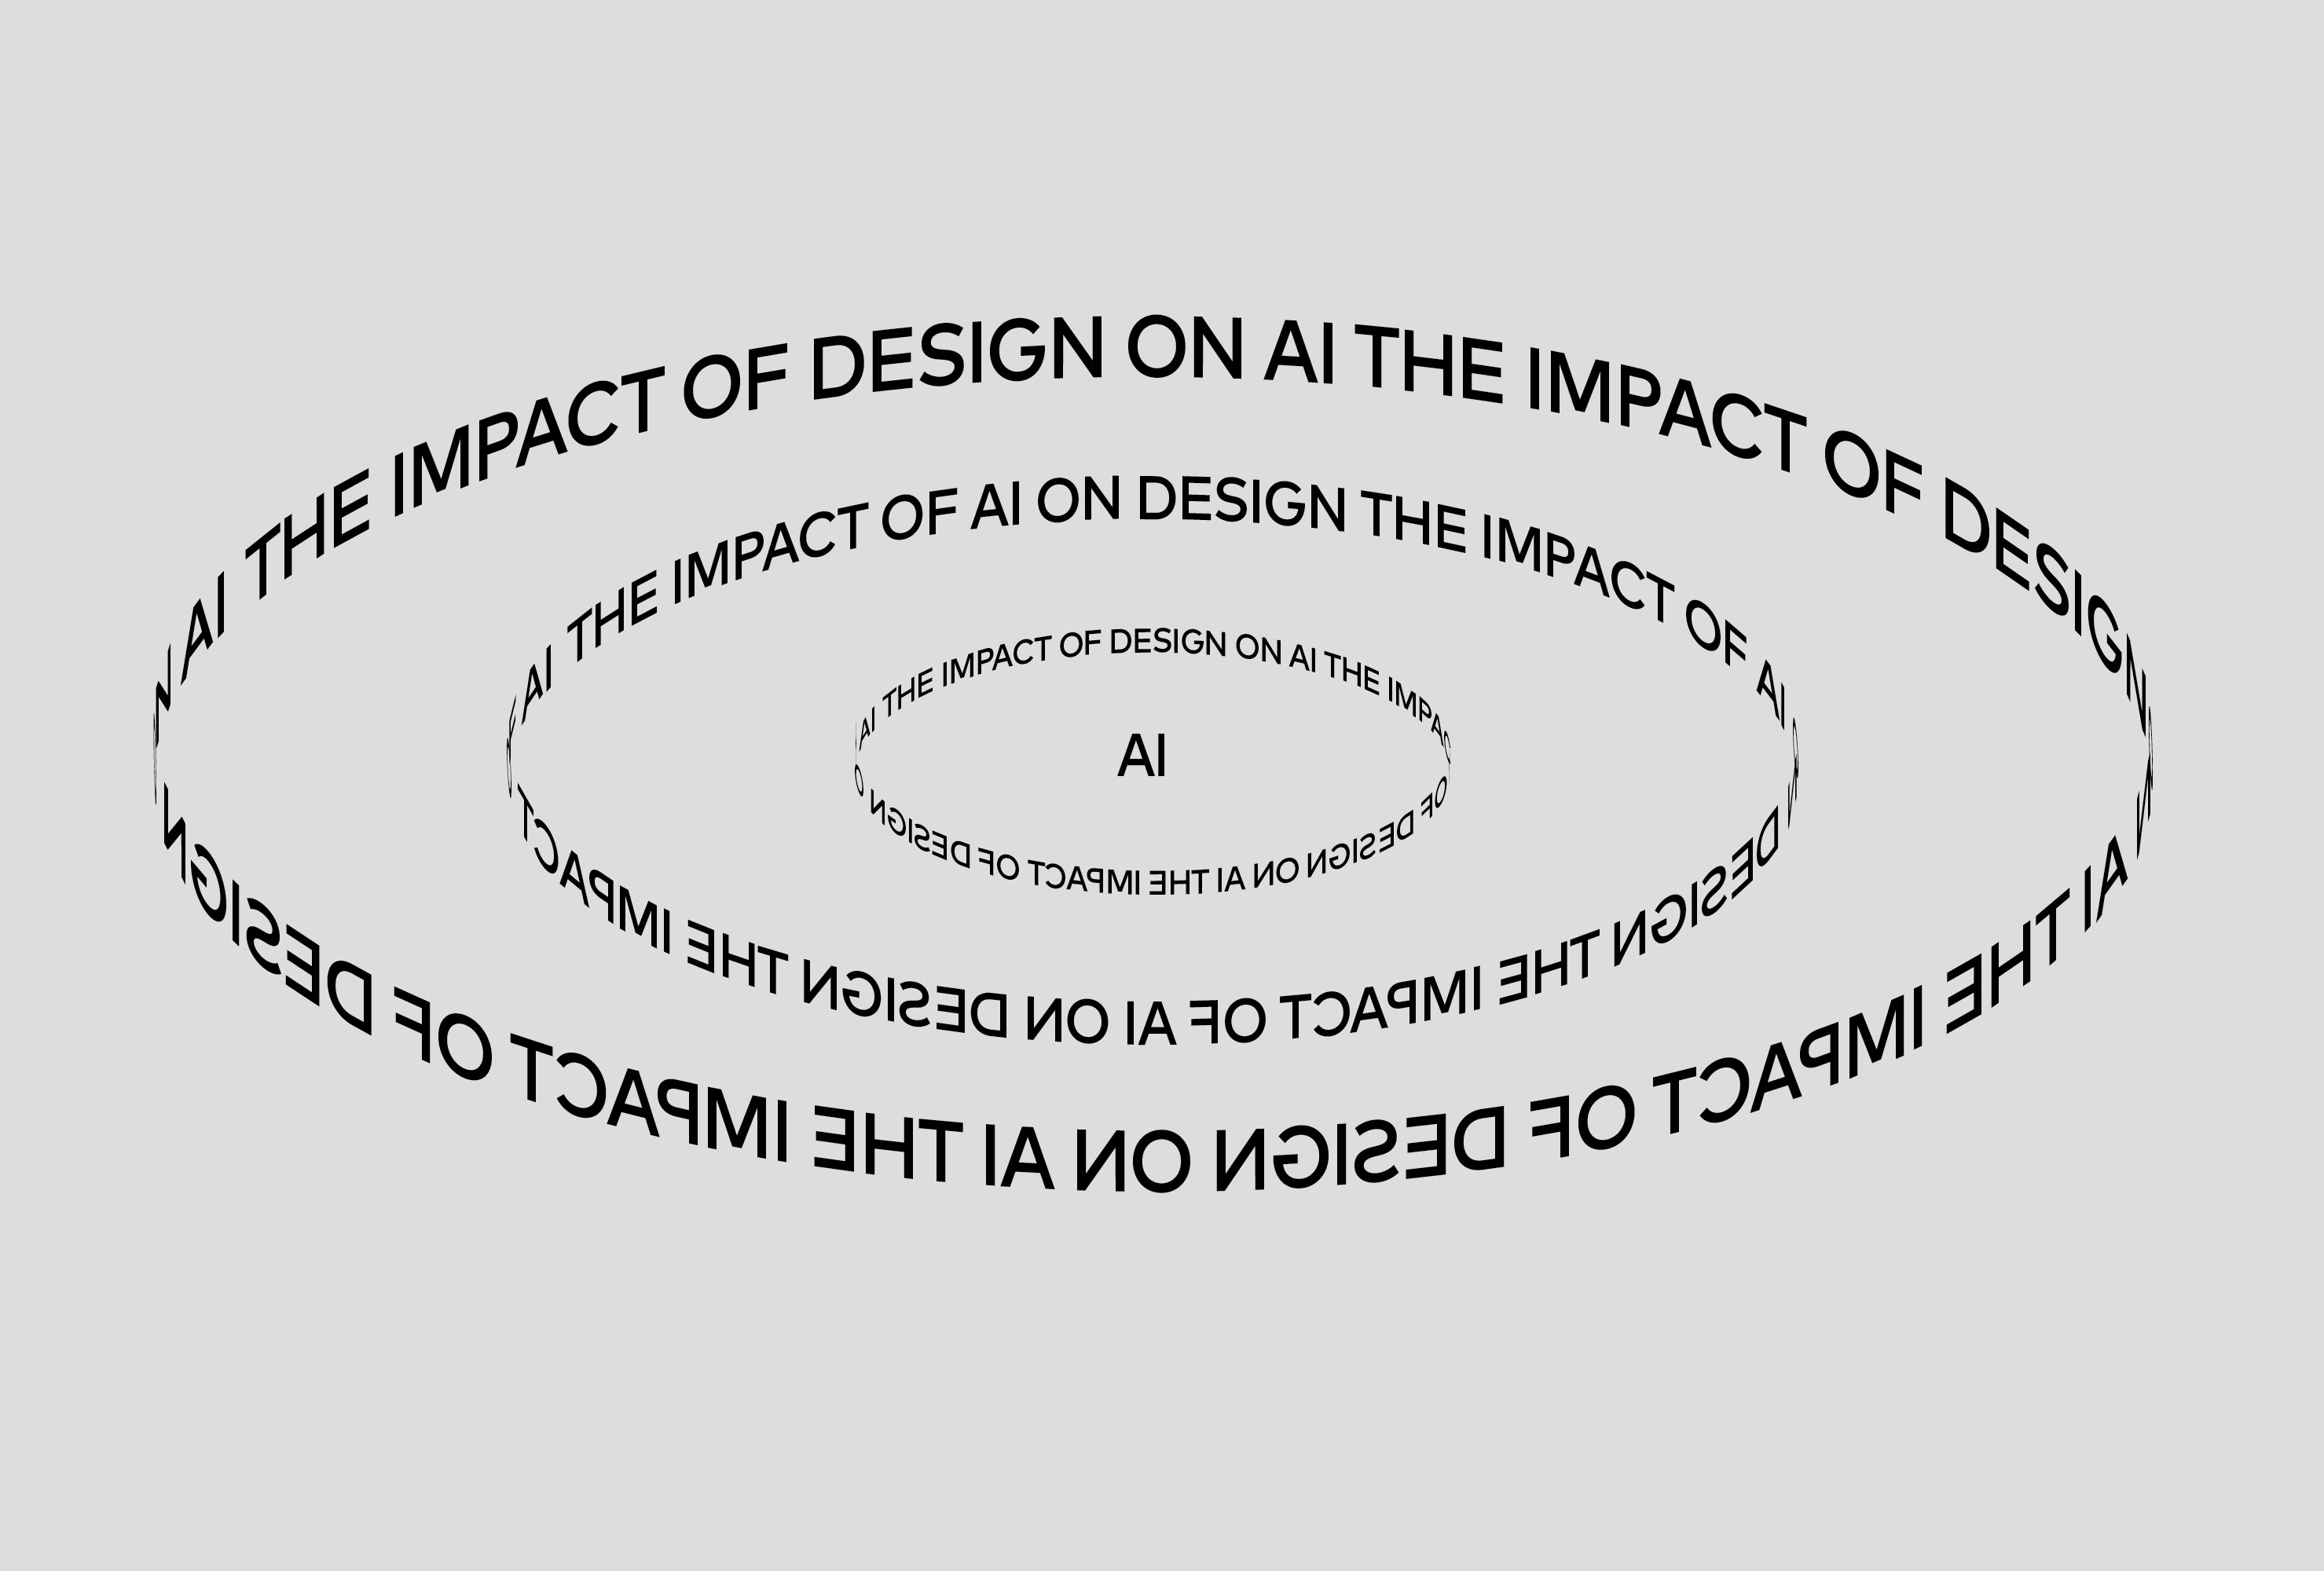 The impact of AI on design